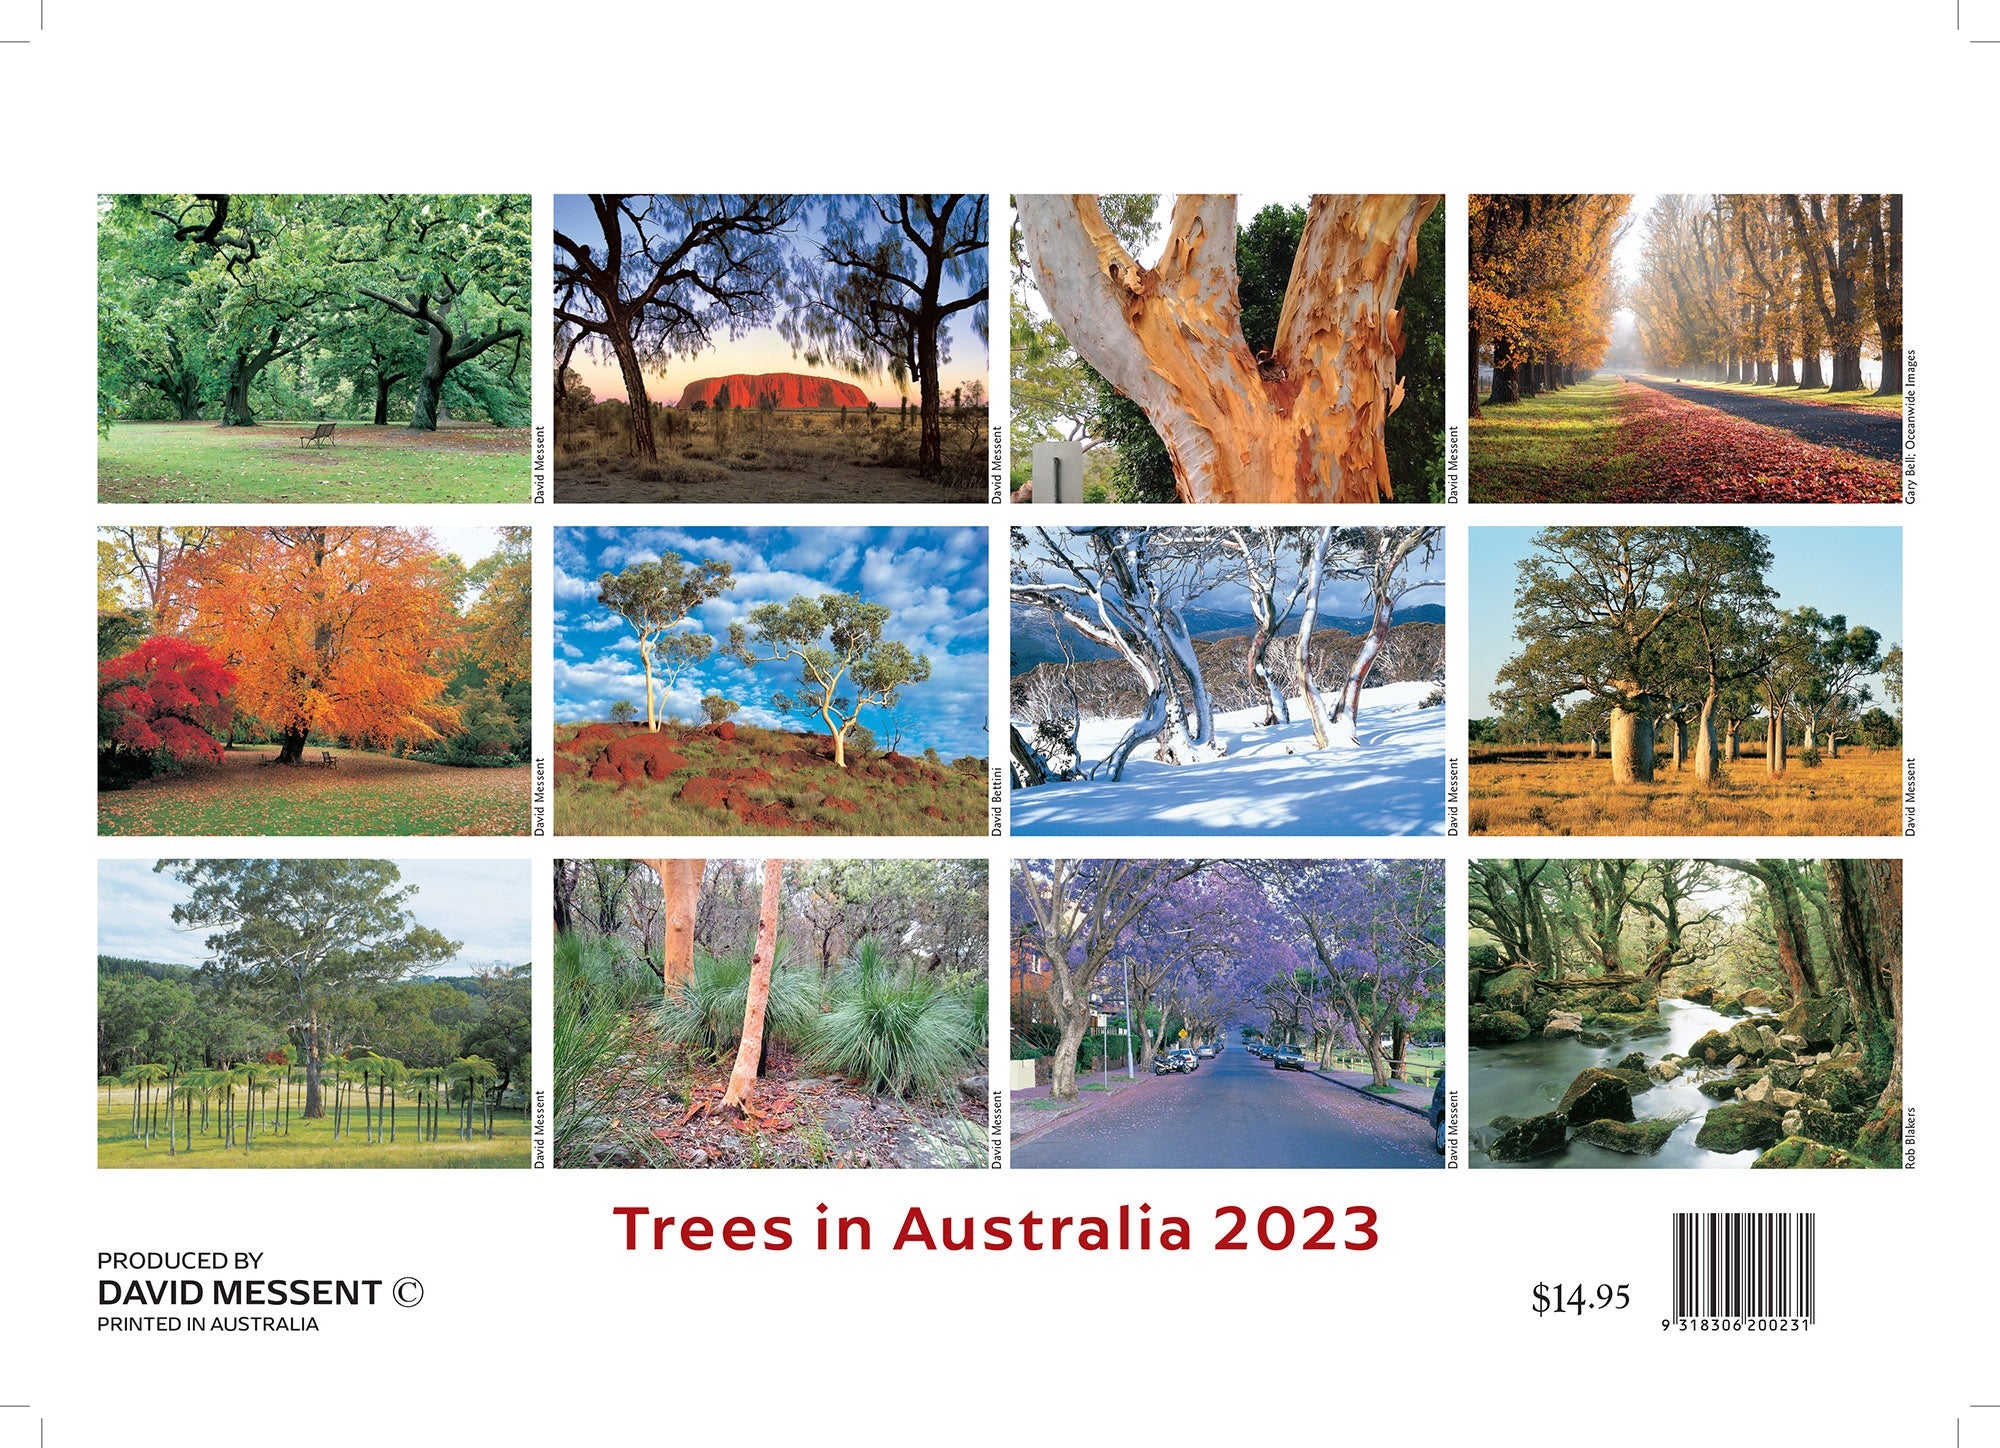 2023 Trees in Australia by David Messent - Horizontal Wall Calendar